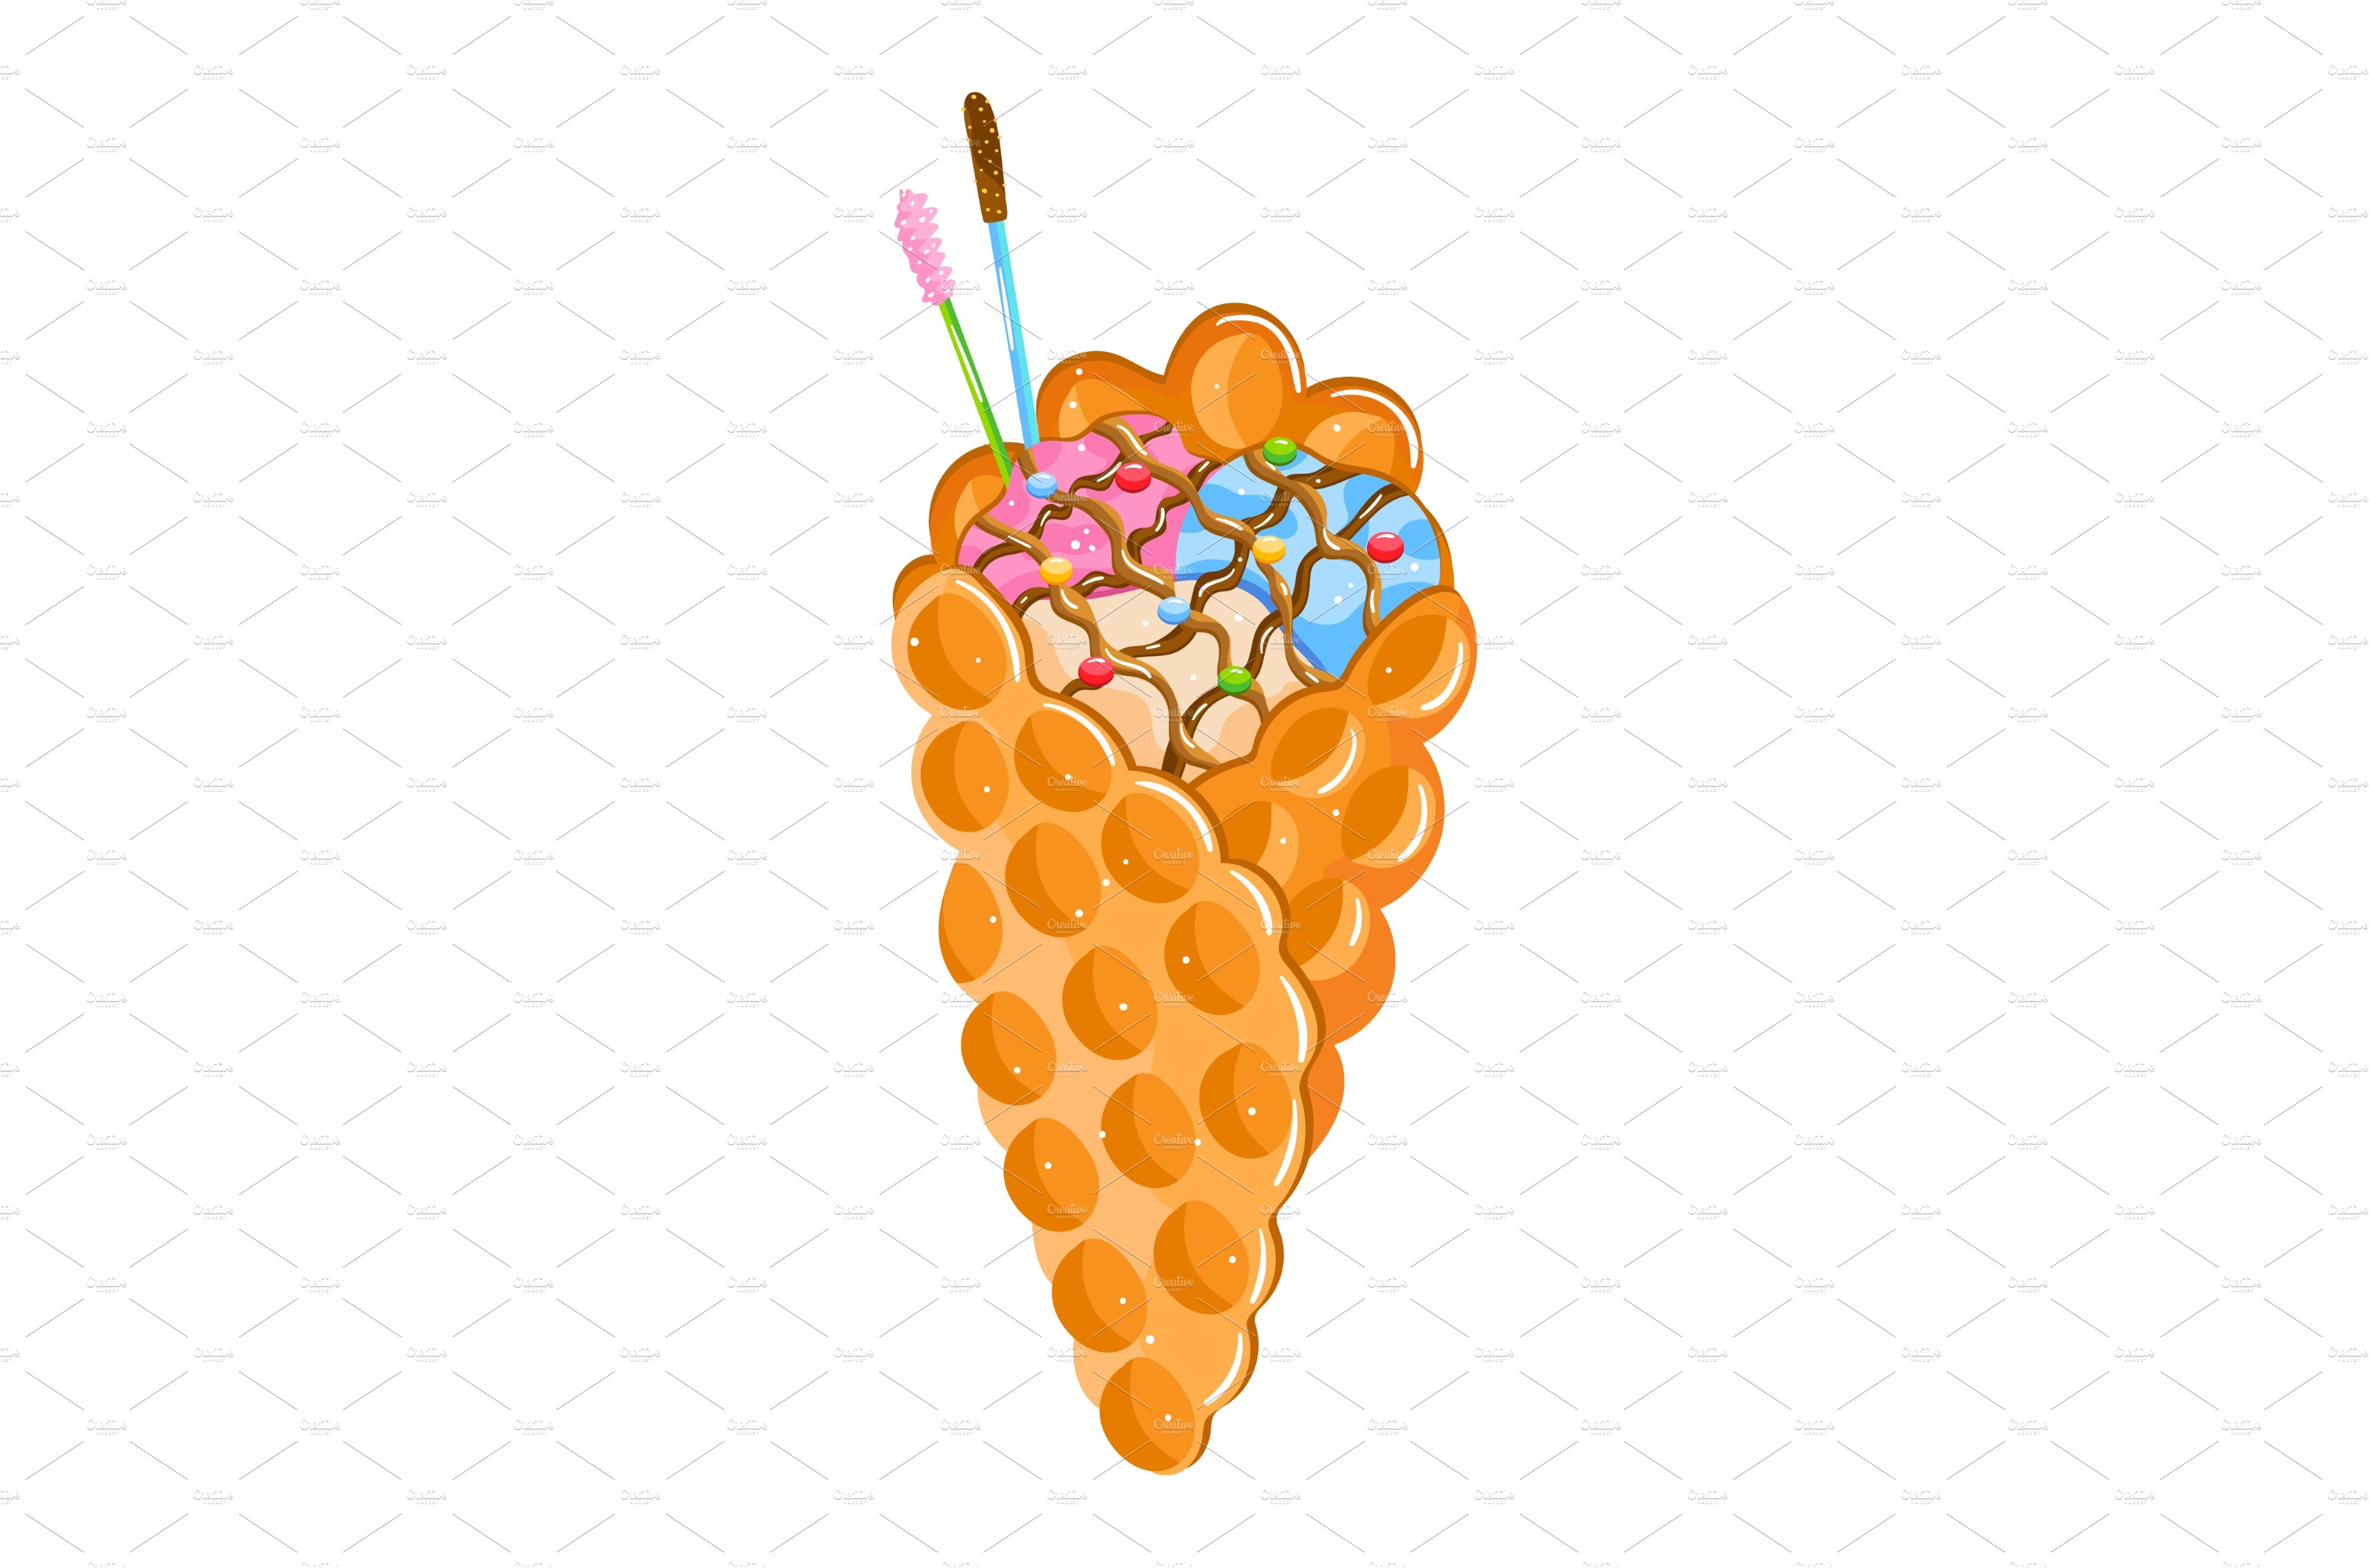 Sweet ice cream, cone shape, vanilla cover image.